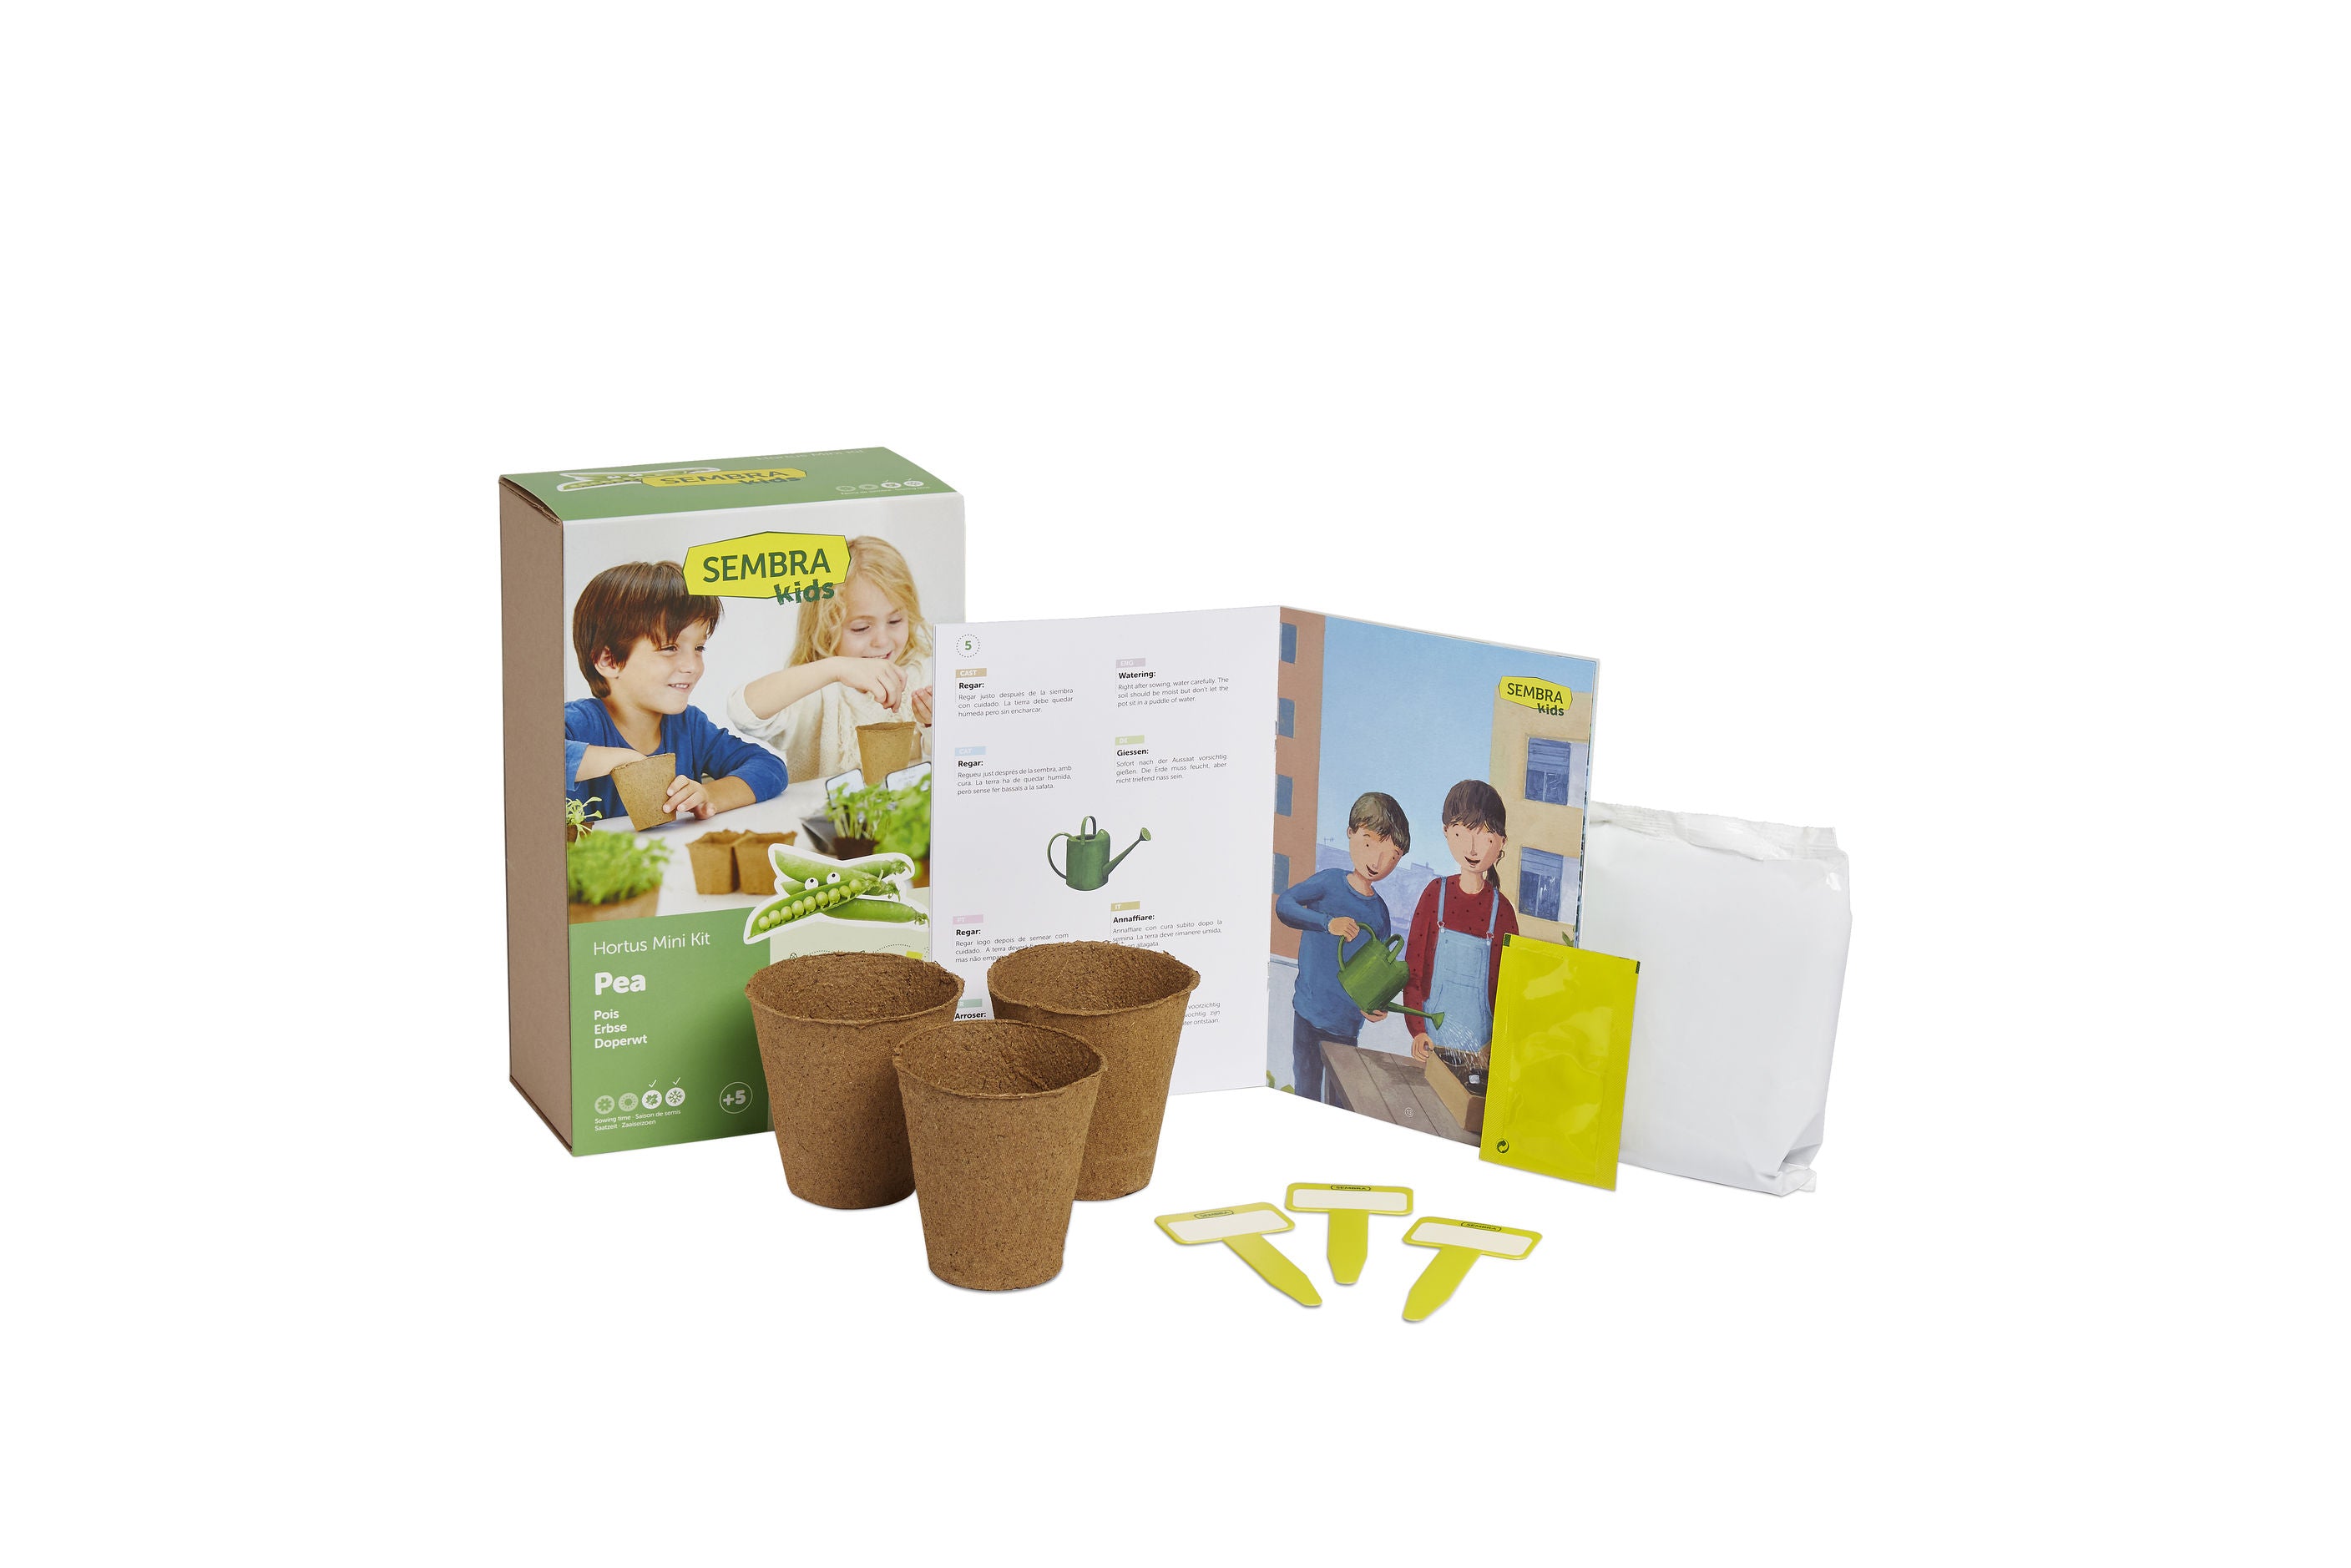 Children's Summer Pea Grow Kit